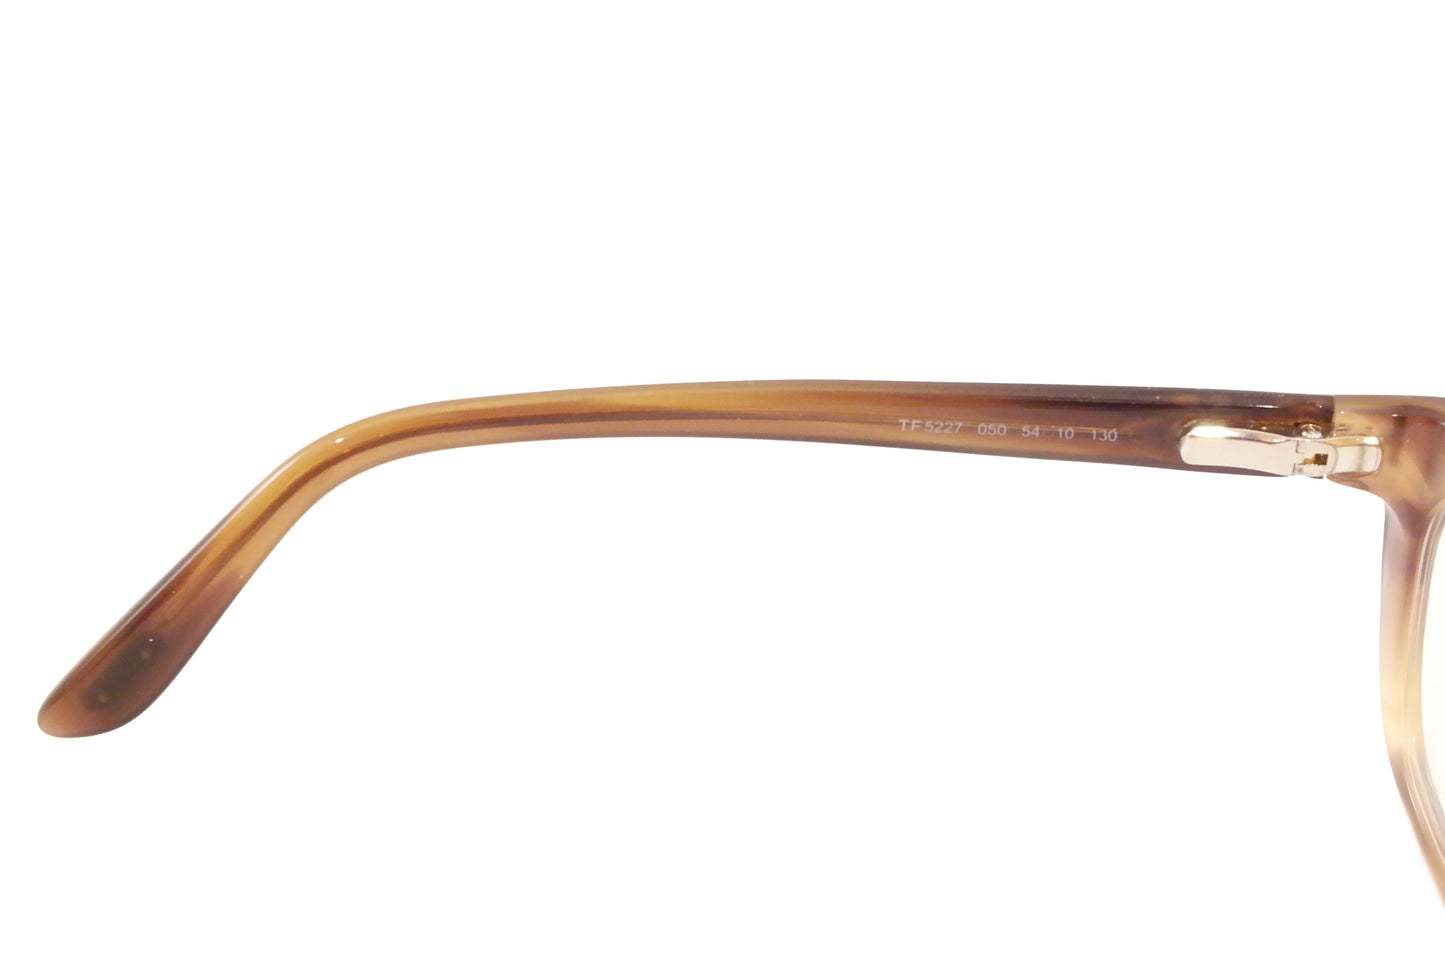 Tom Ford Eyeglasses Frame TF5227 050 Brown Gradient Plastic Italy Made 54-10-130 - Frame Bay